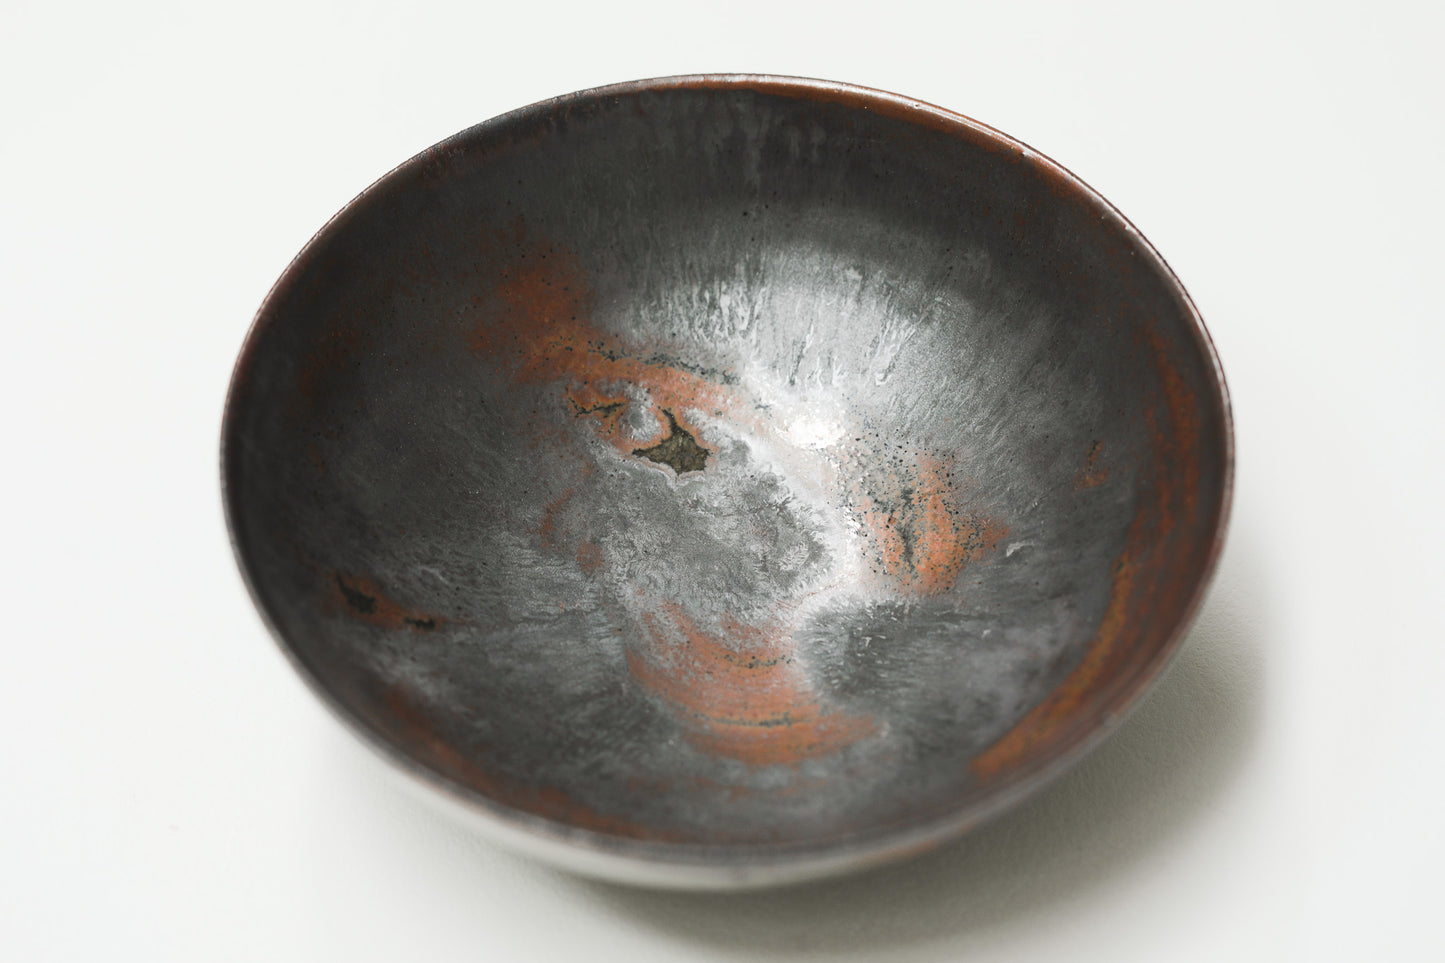 Florian Gadsby: Medium Bowl